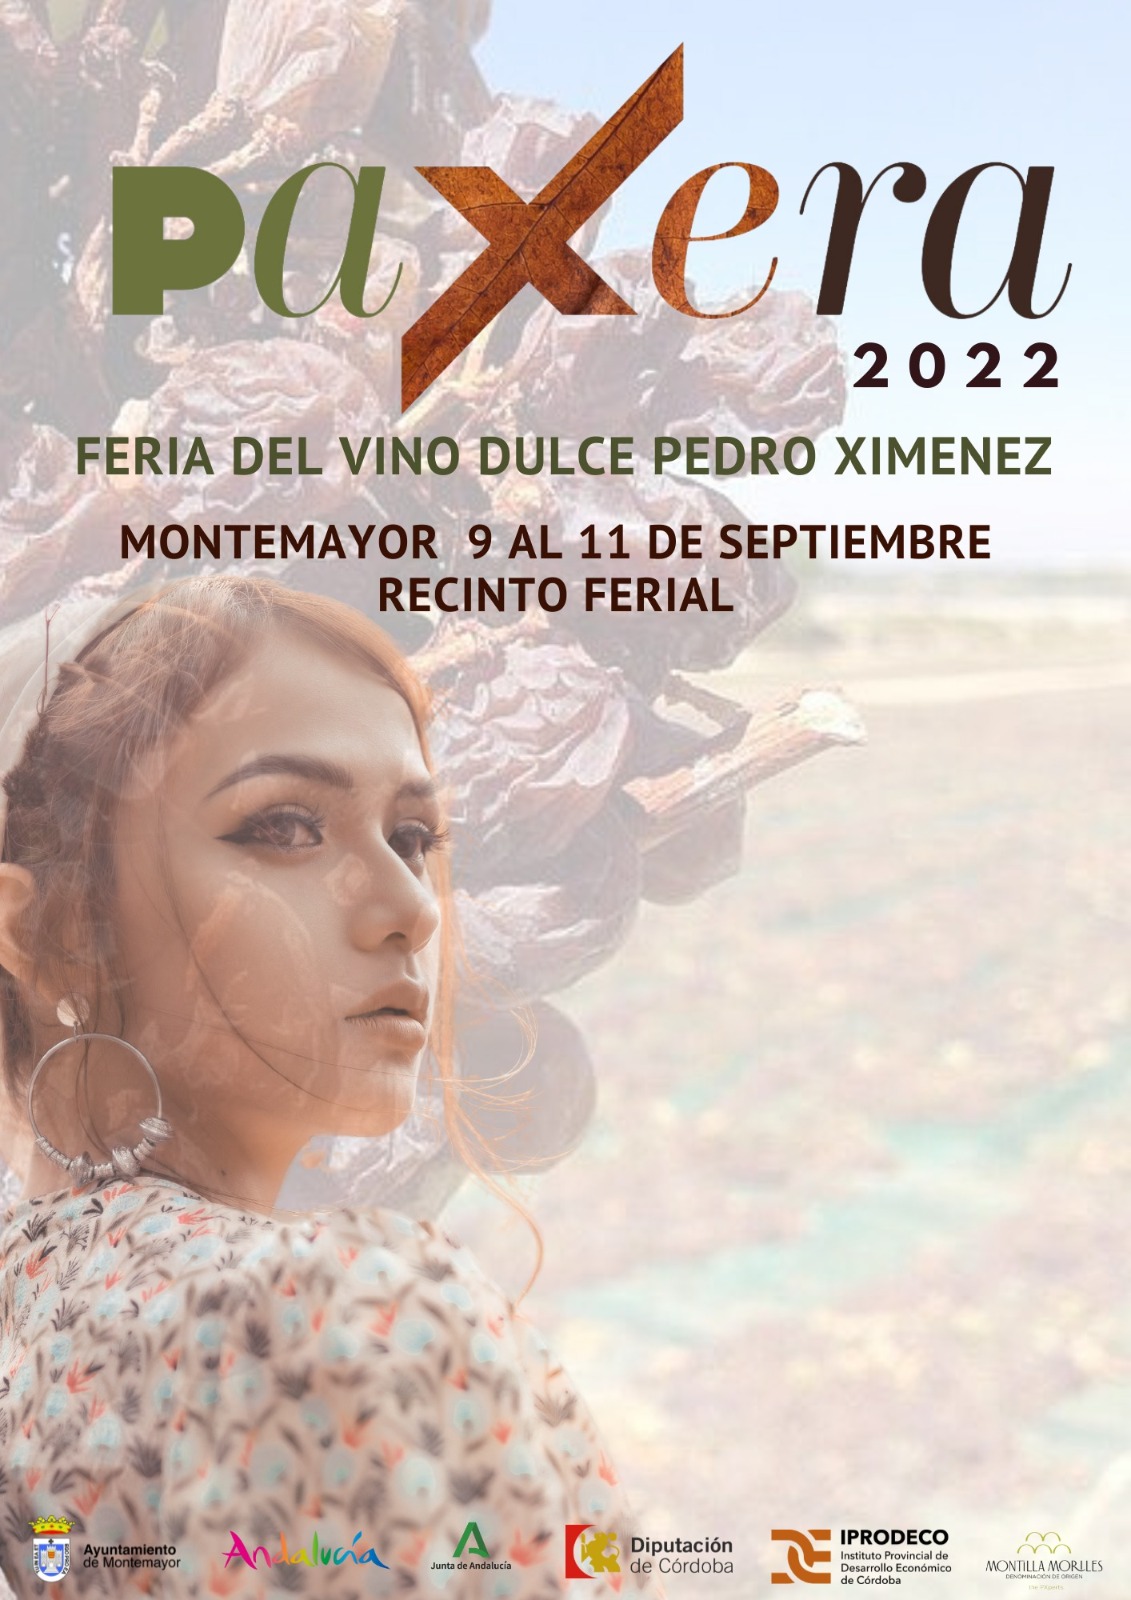 Paxera 2022 - Feria del Vino Dulce Pedro Ximénez